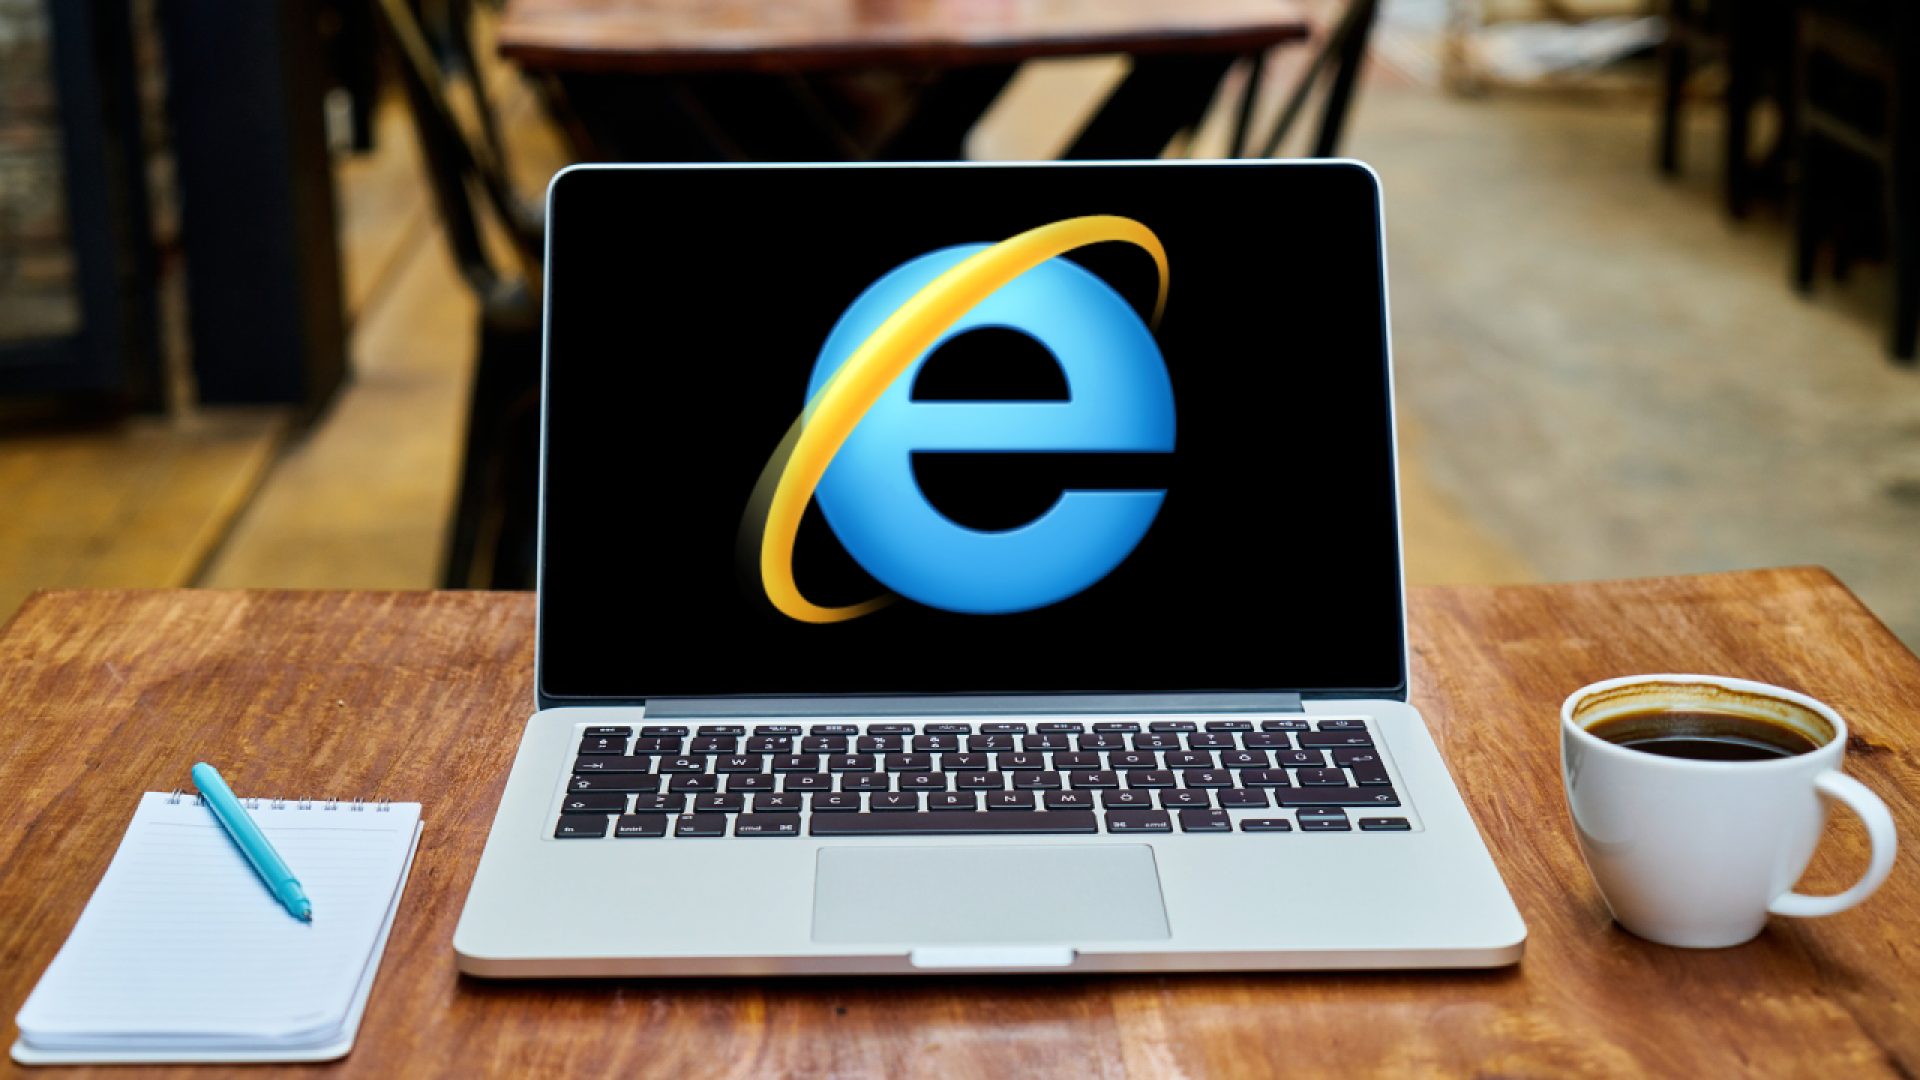 Microsoft will finally shut down Internet Explorer in February 2023